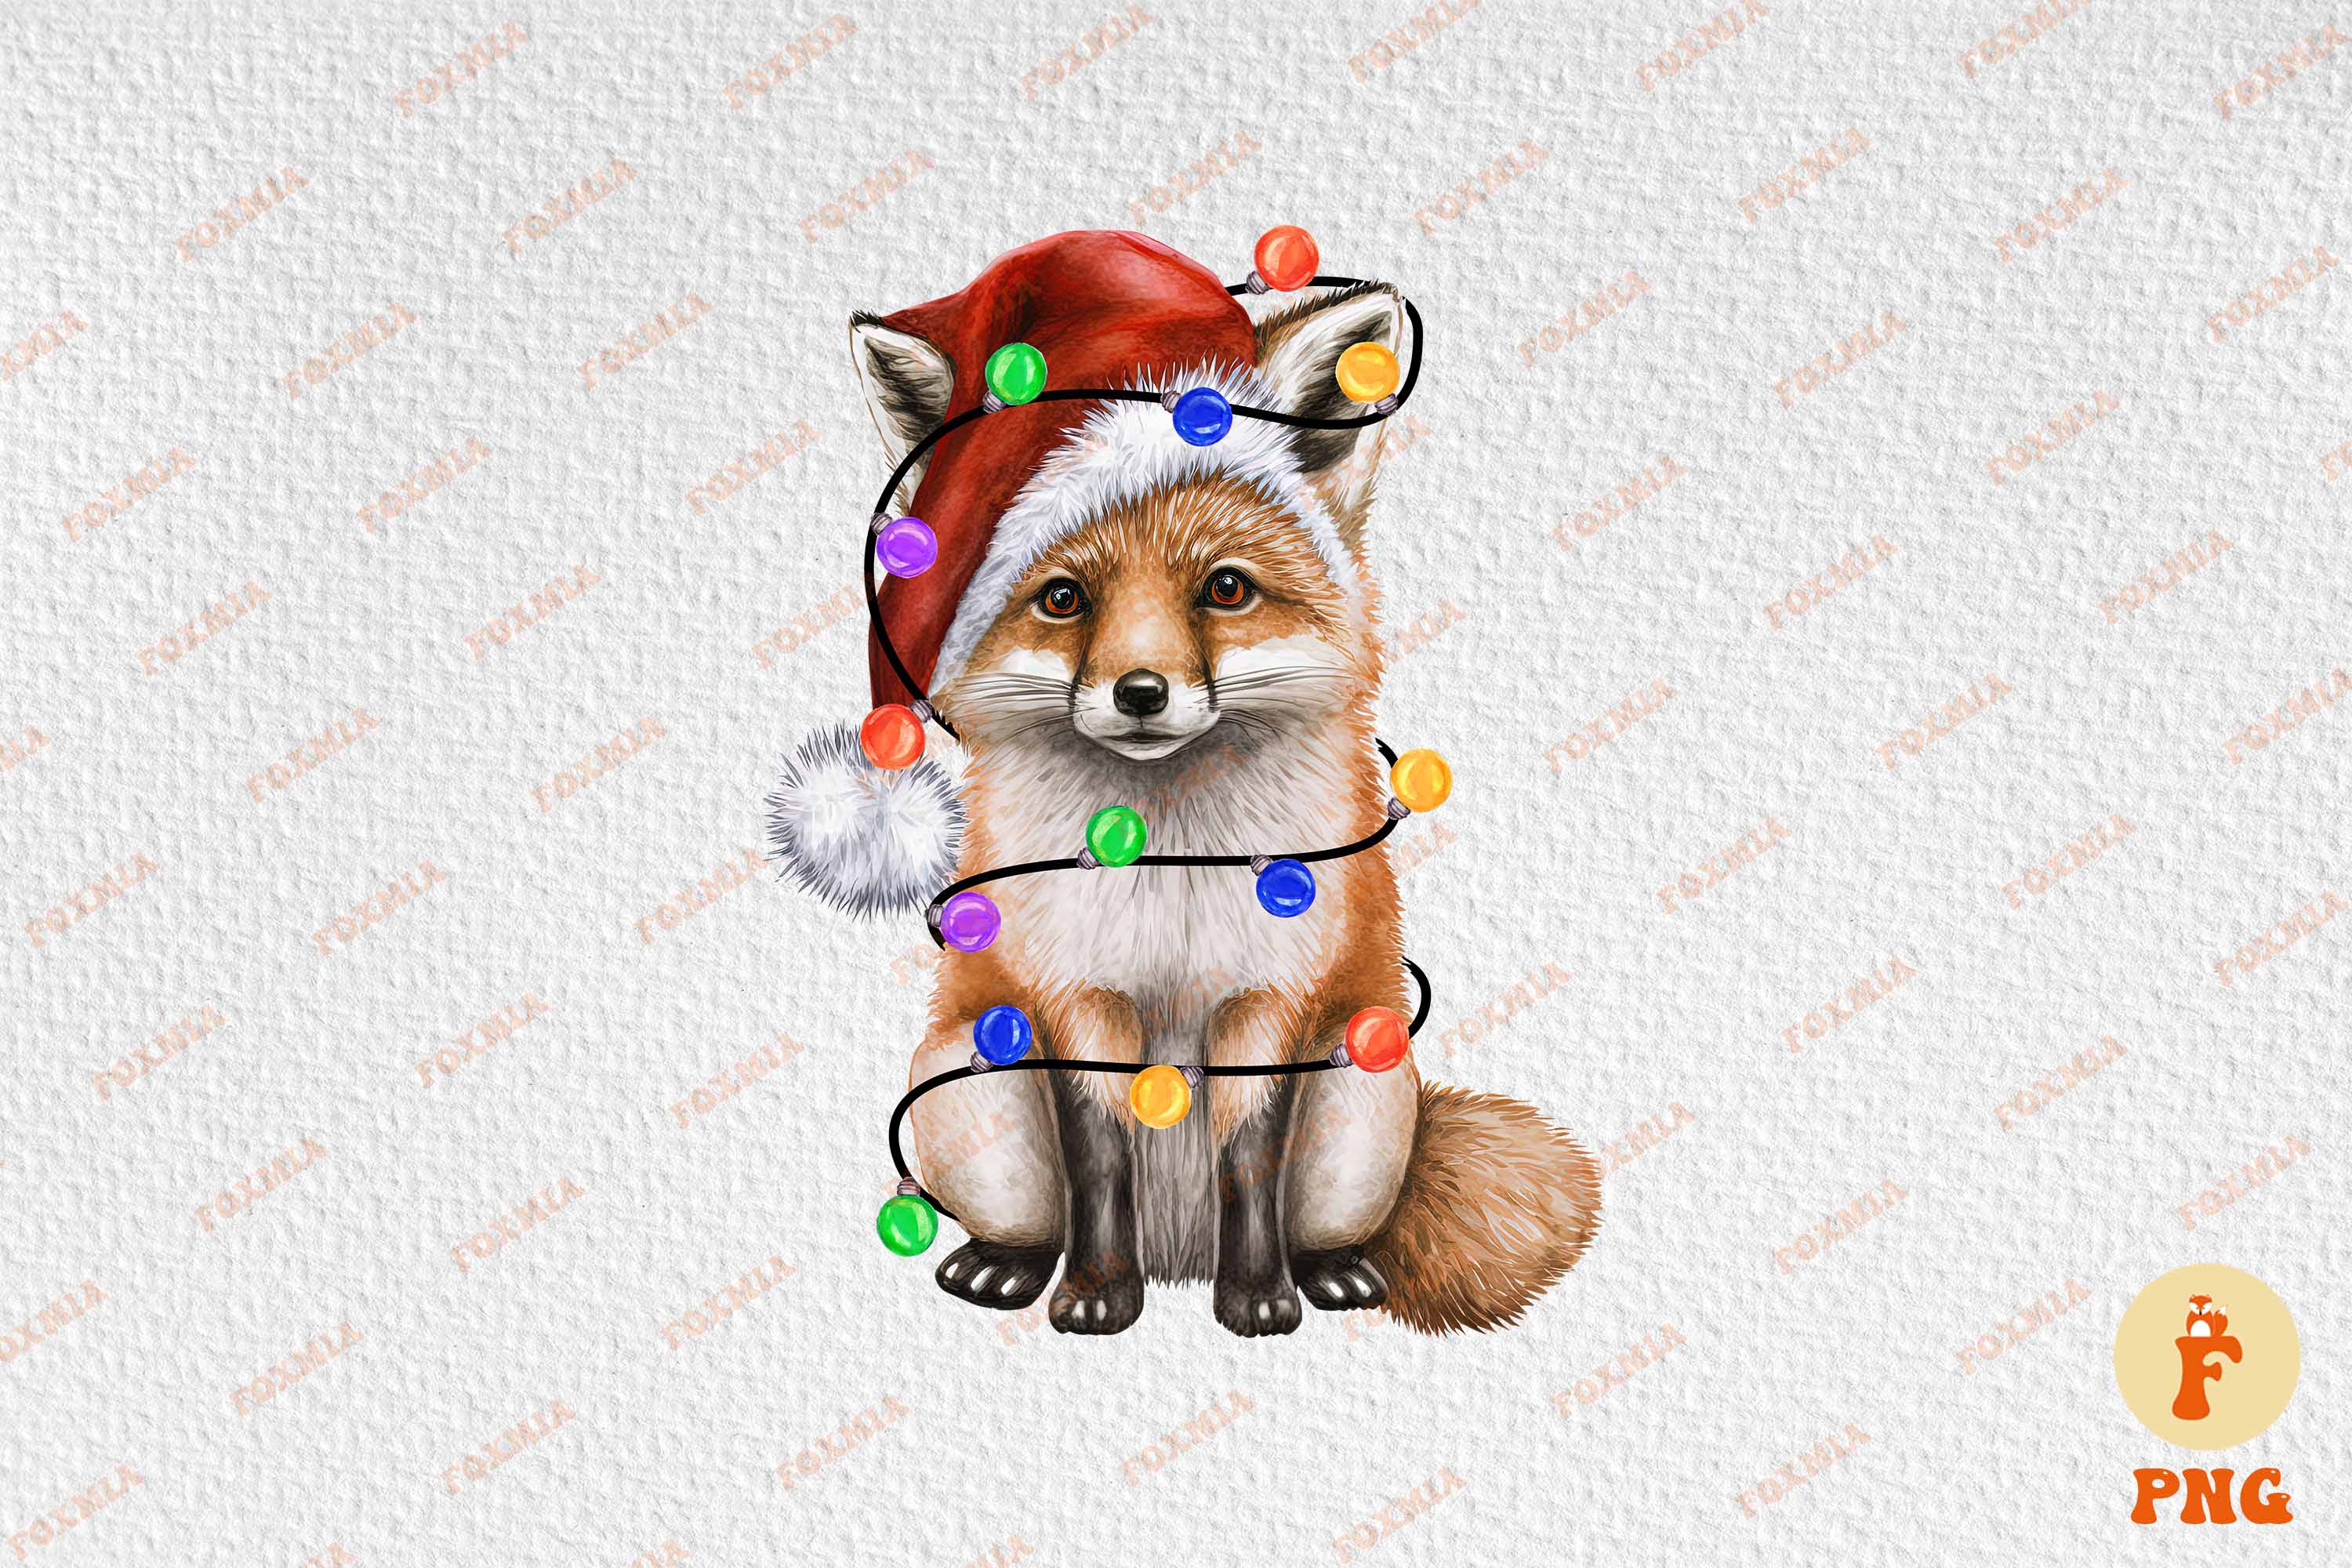 Enchanting image of a fox in a santa hat.